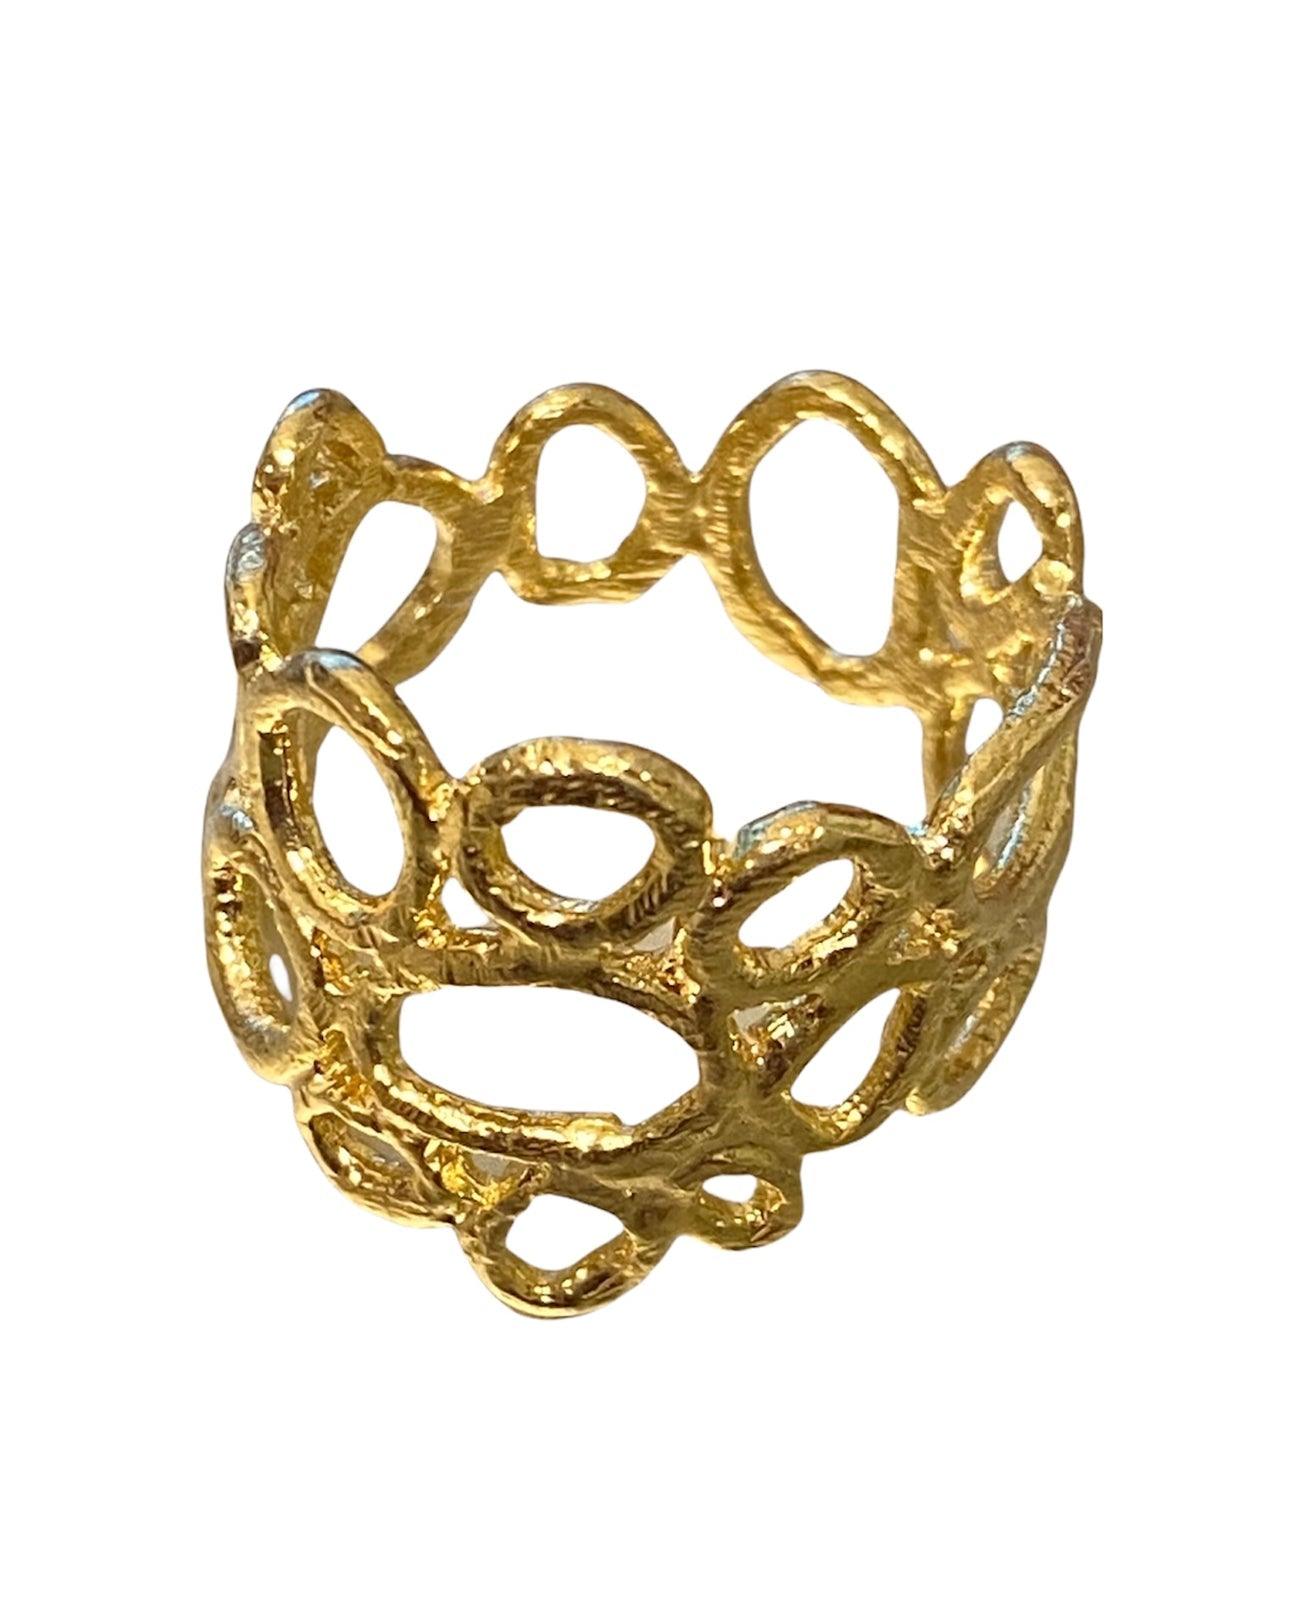 Saphirim Textured Circles Ring - 18ct Gold Vermeil - Rococo Jewellery